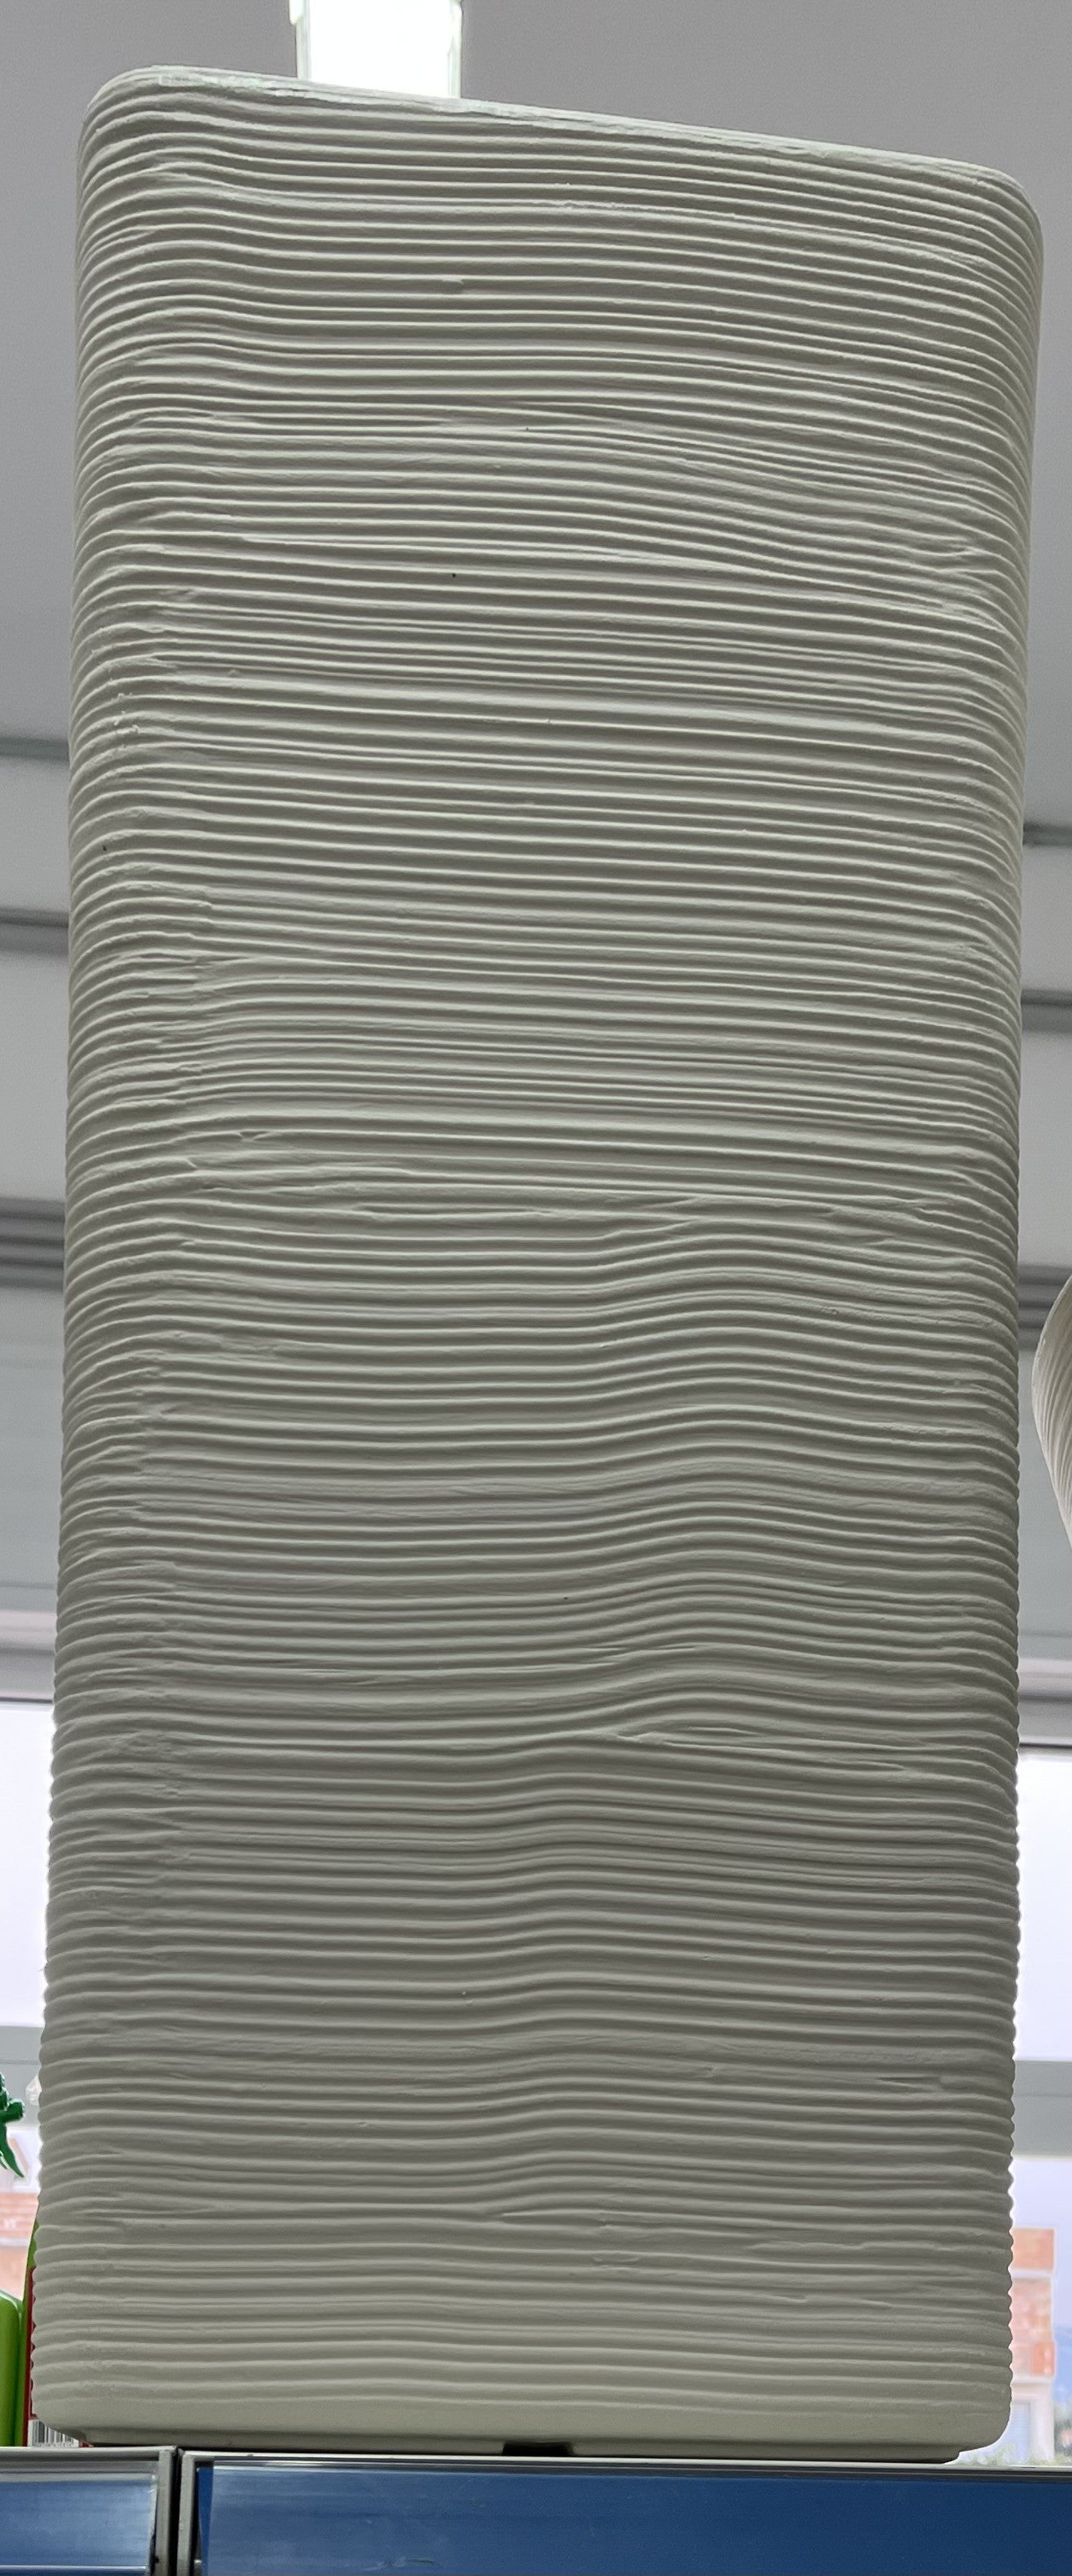 Vaso pilone shabby 75 cm bianco - vaso per interni ed esterni elegante e economico